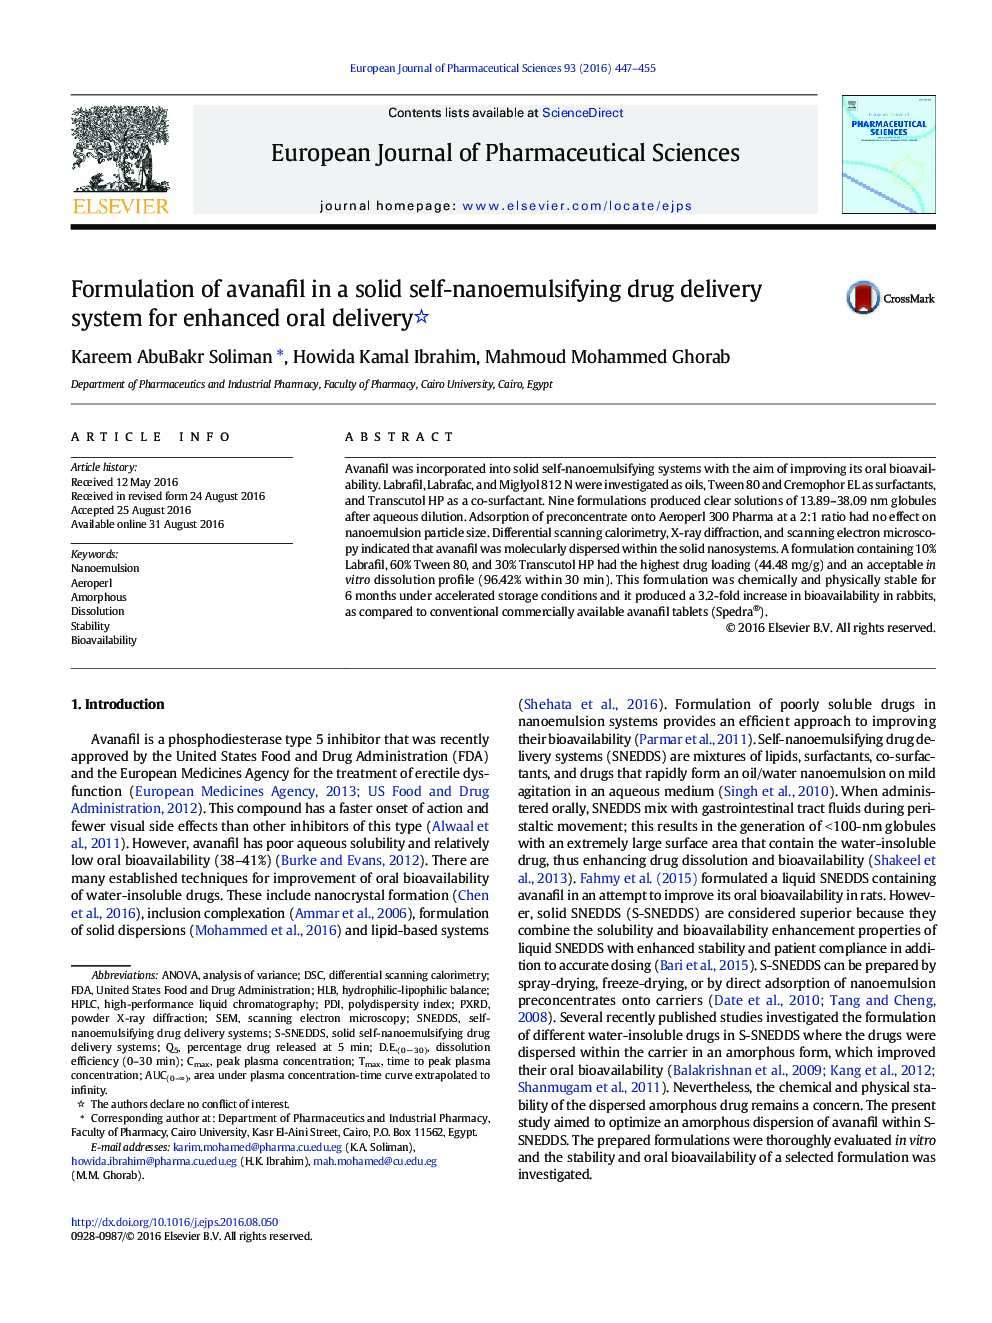 Formulation of avanafil in a solid self-nanoemulsifying drug delivery system for enhanced oral delivery